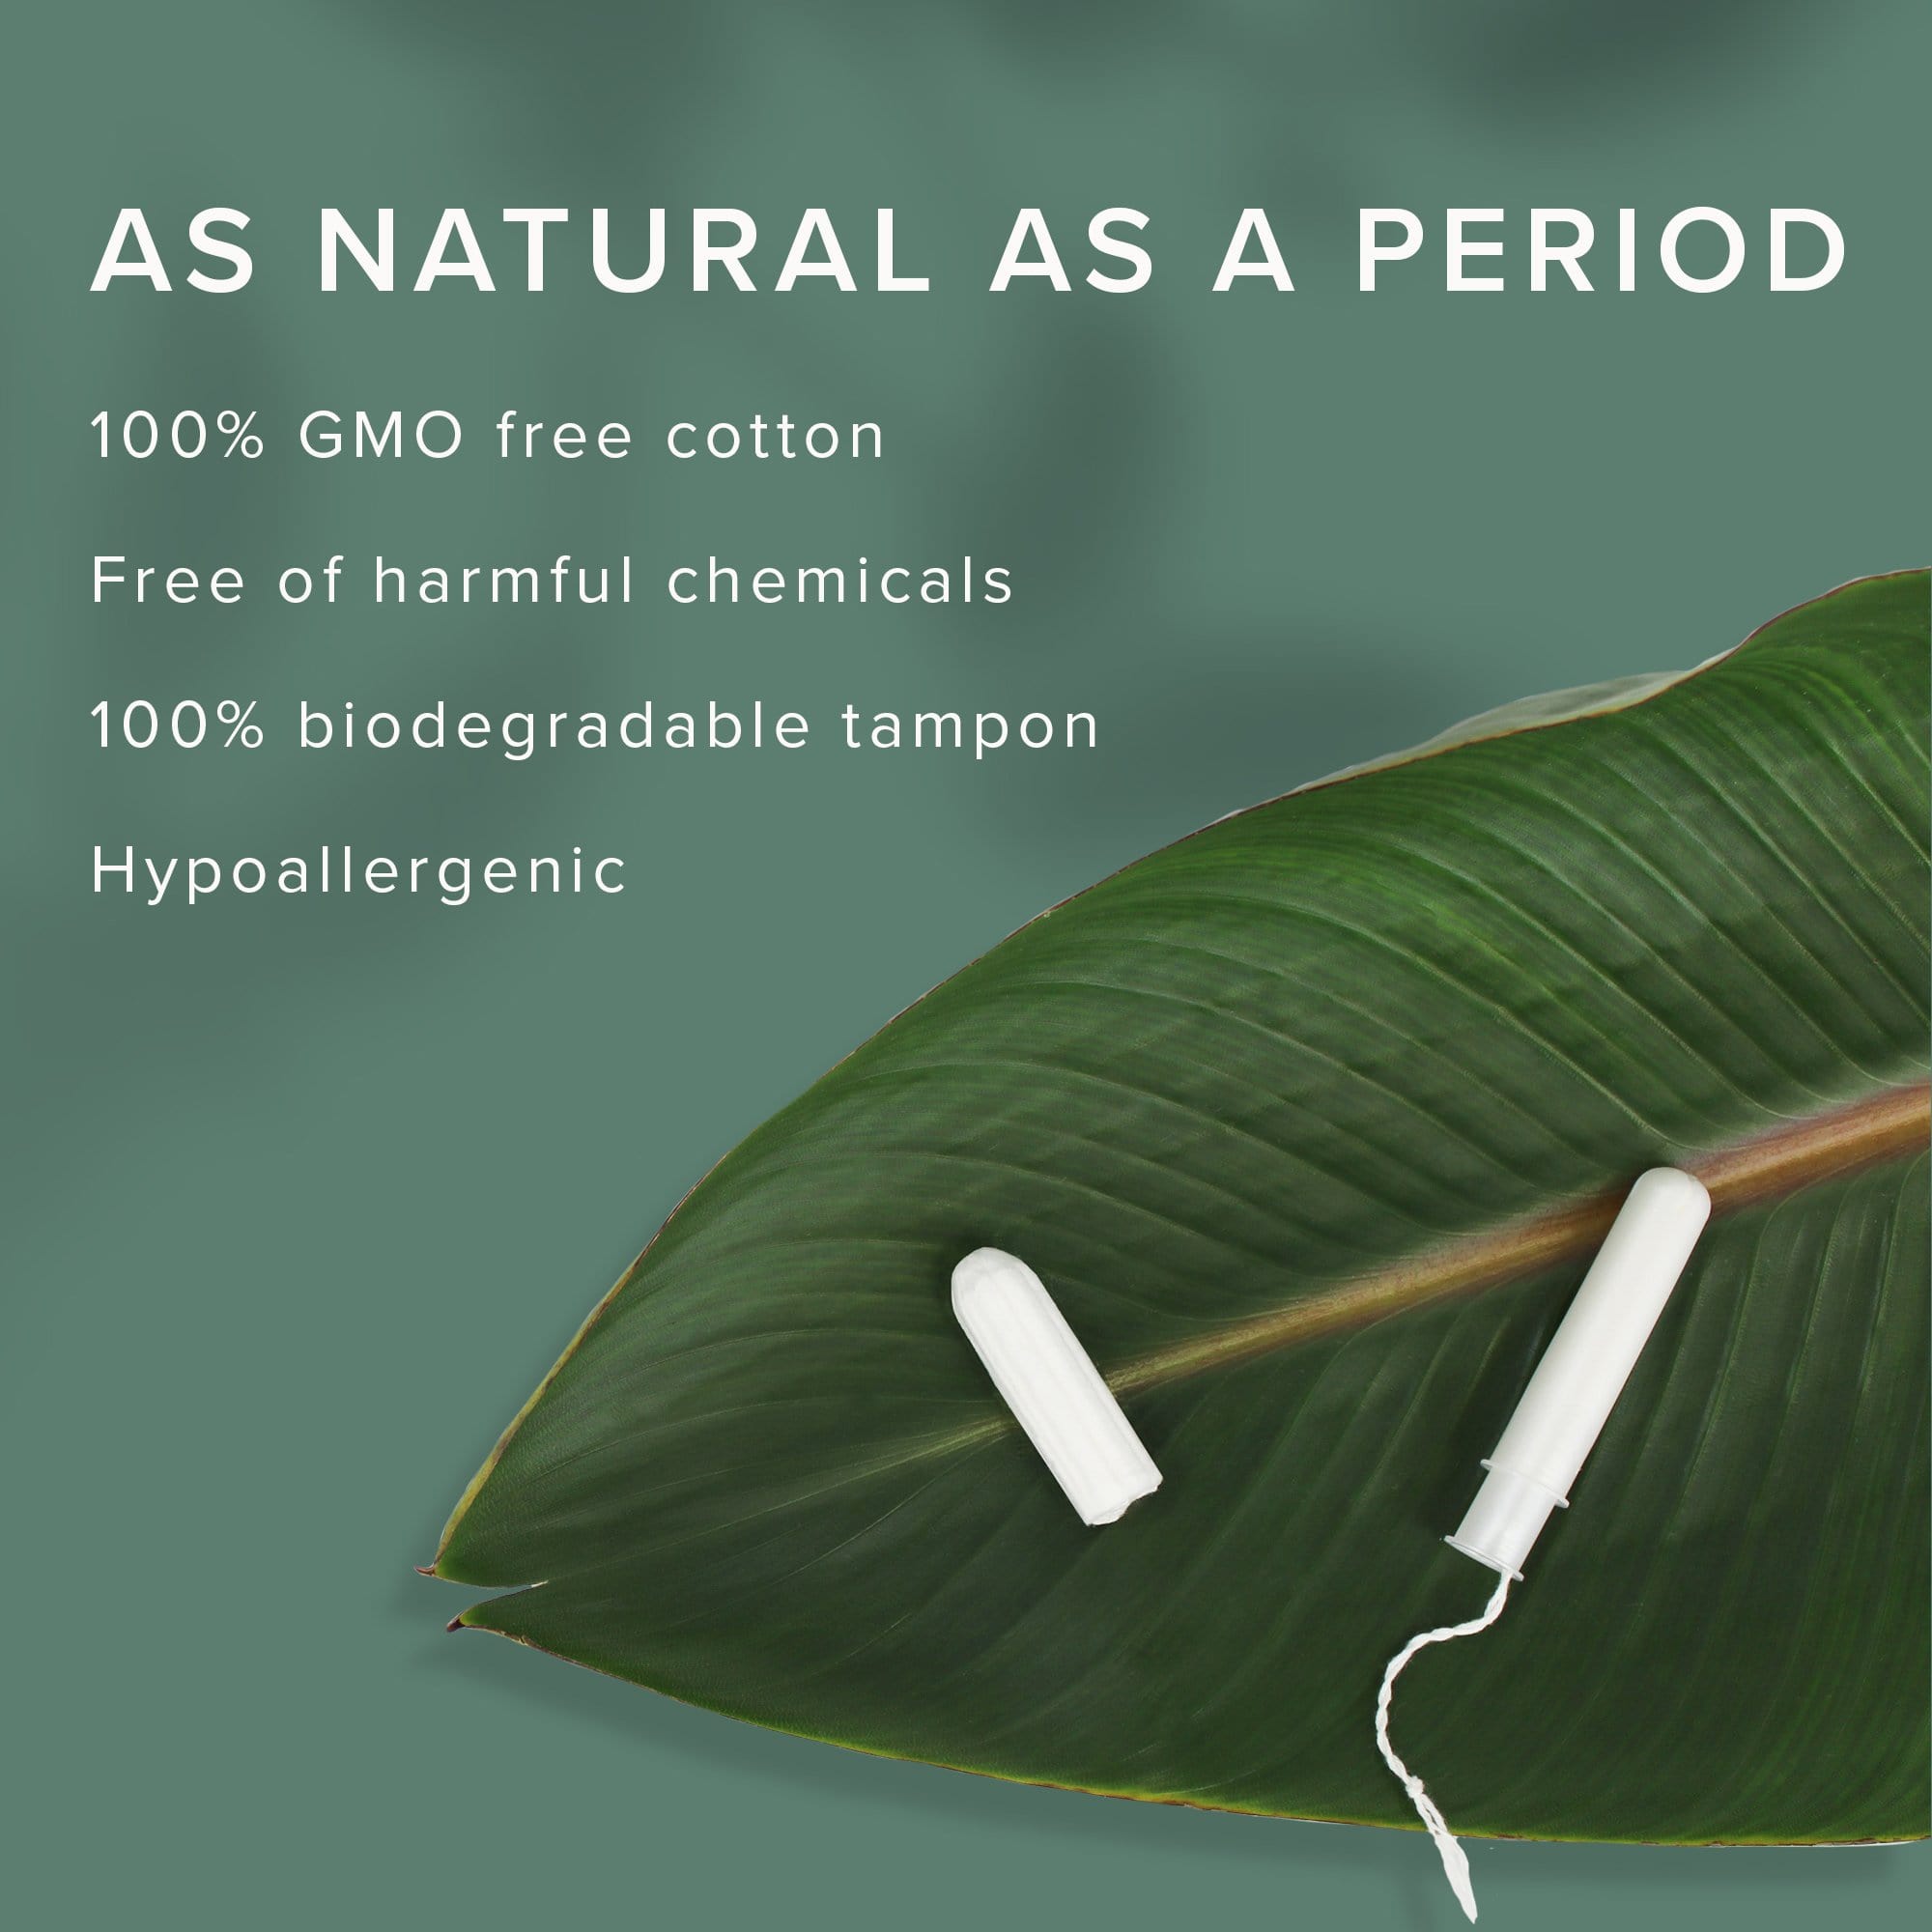 Veeda 100% Natural Cotton Applicator Free Super Tampons, Chlorine